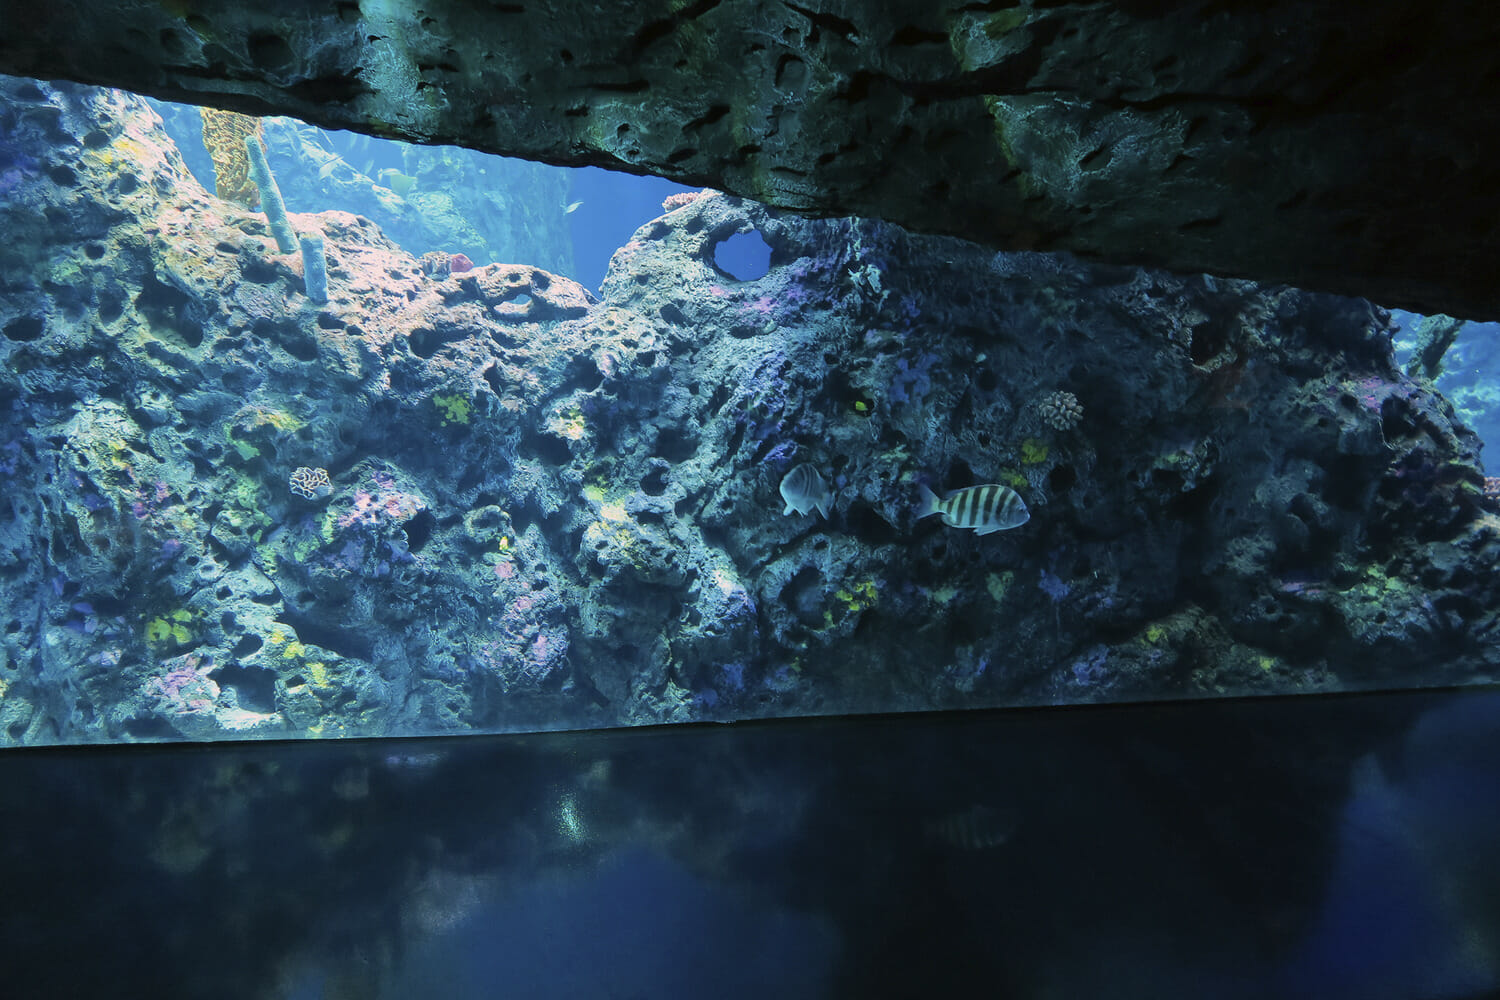 A large aquarium with fish in it.